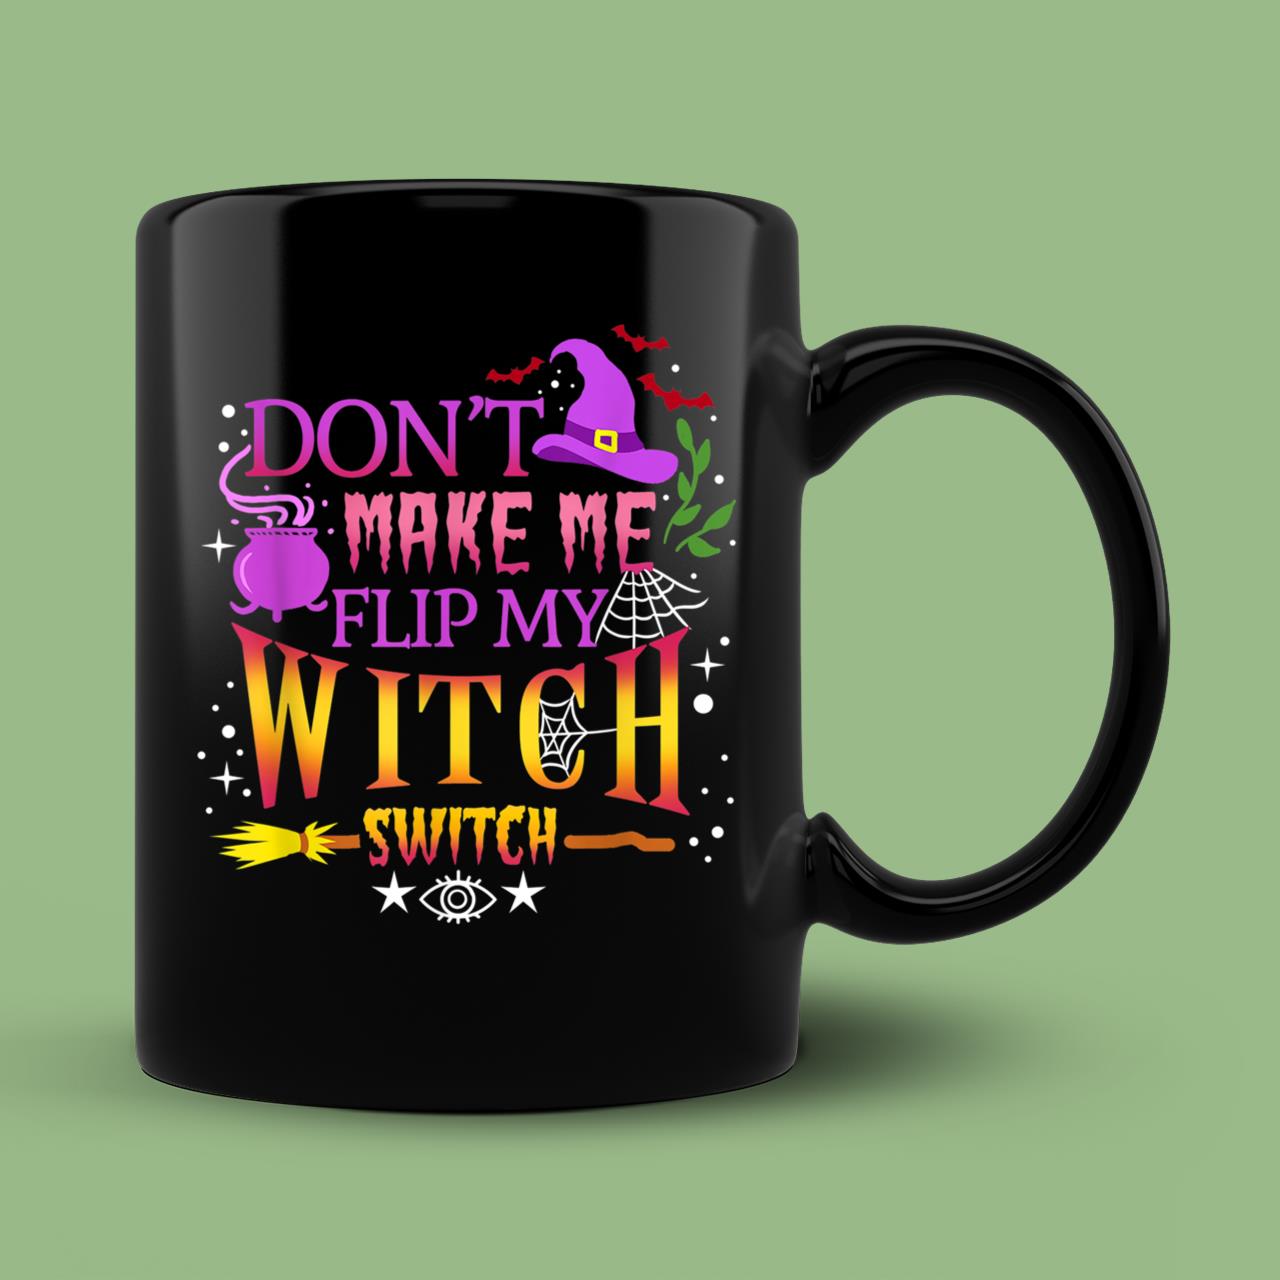 Skitongift Spooky Ceramic Novelty Coffee Mug Don’t Make Me Flip My Witch Switch Halloween Mug